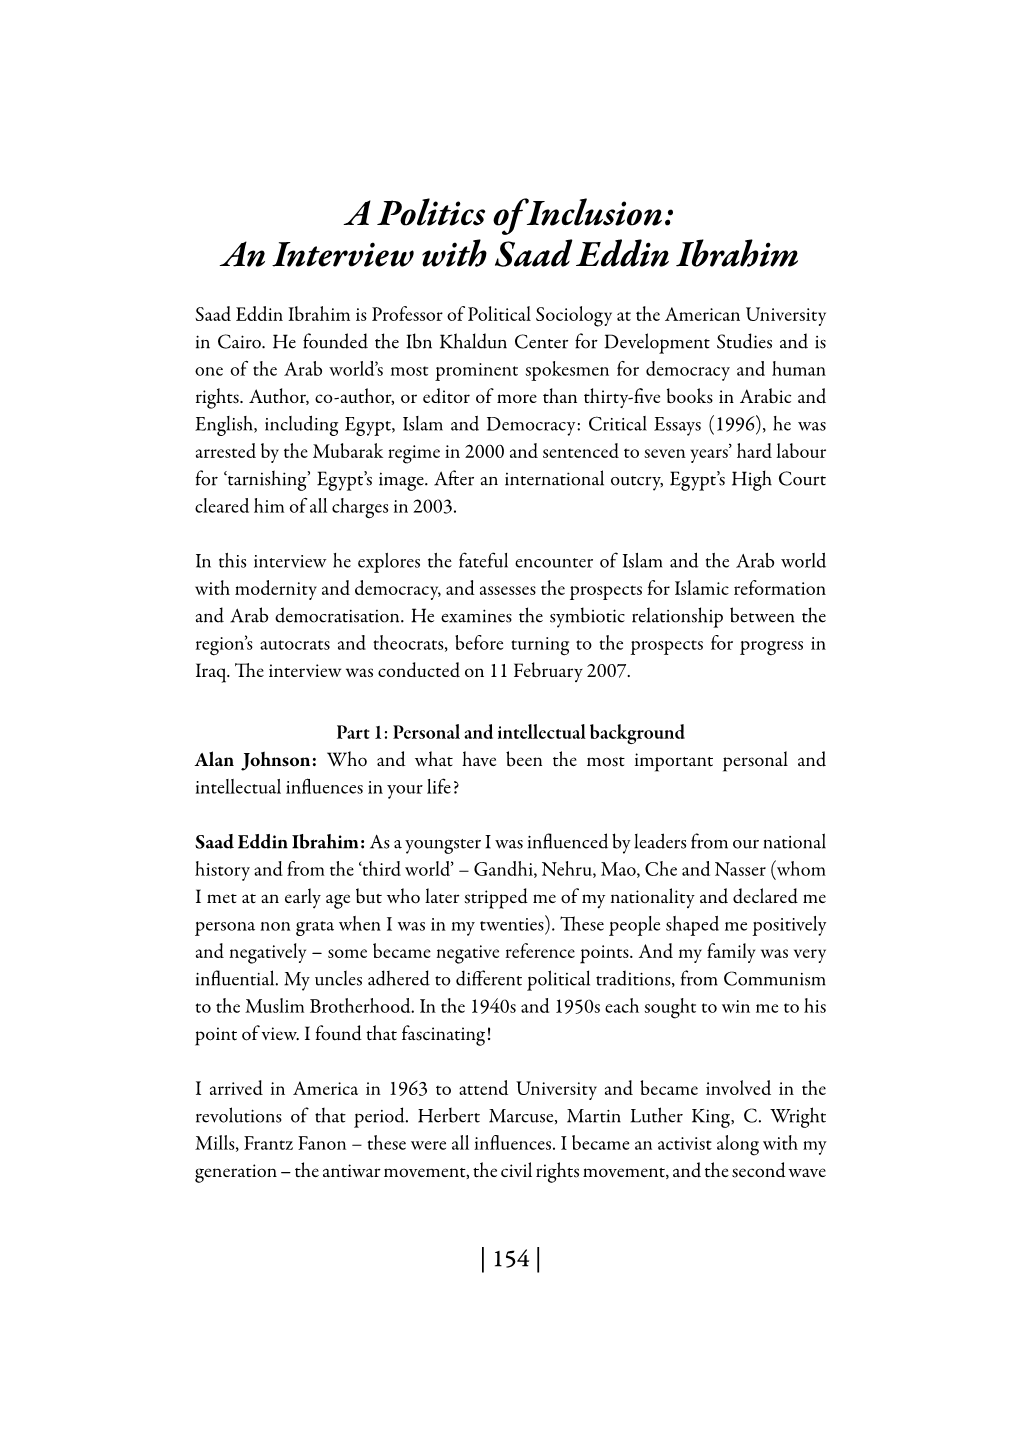 A Politics of Inclusion: an Interview with Saad Eddin Ibrahim